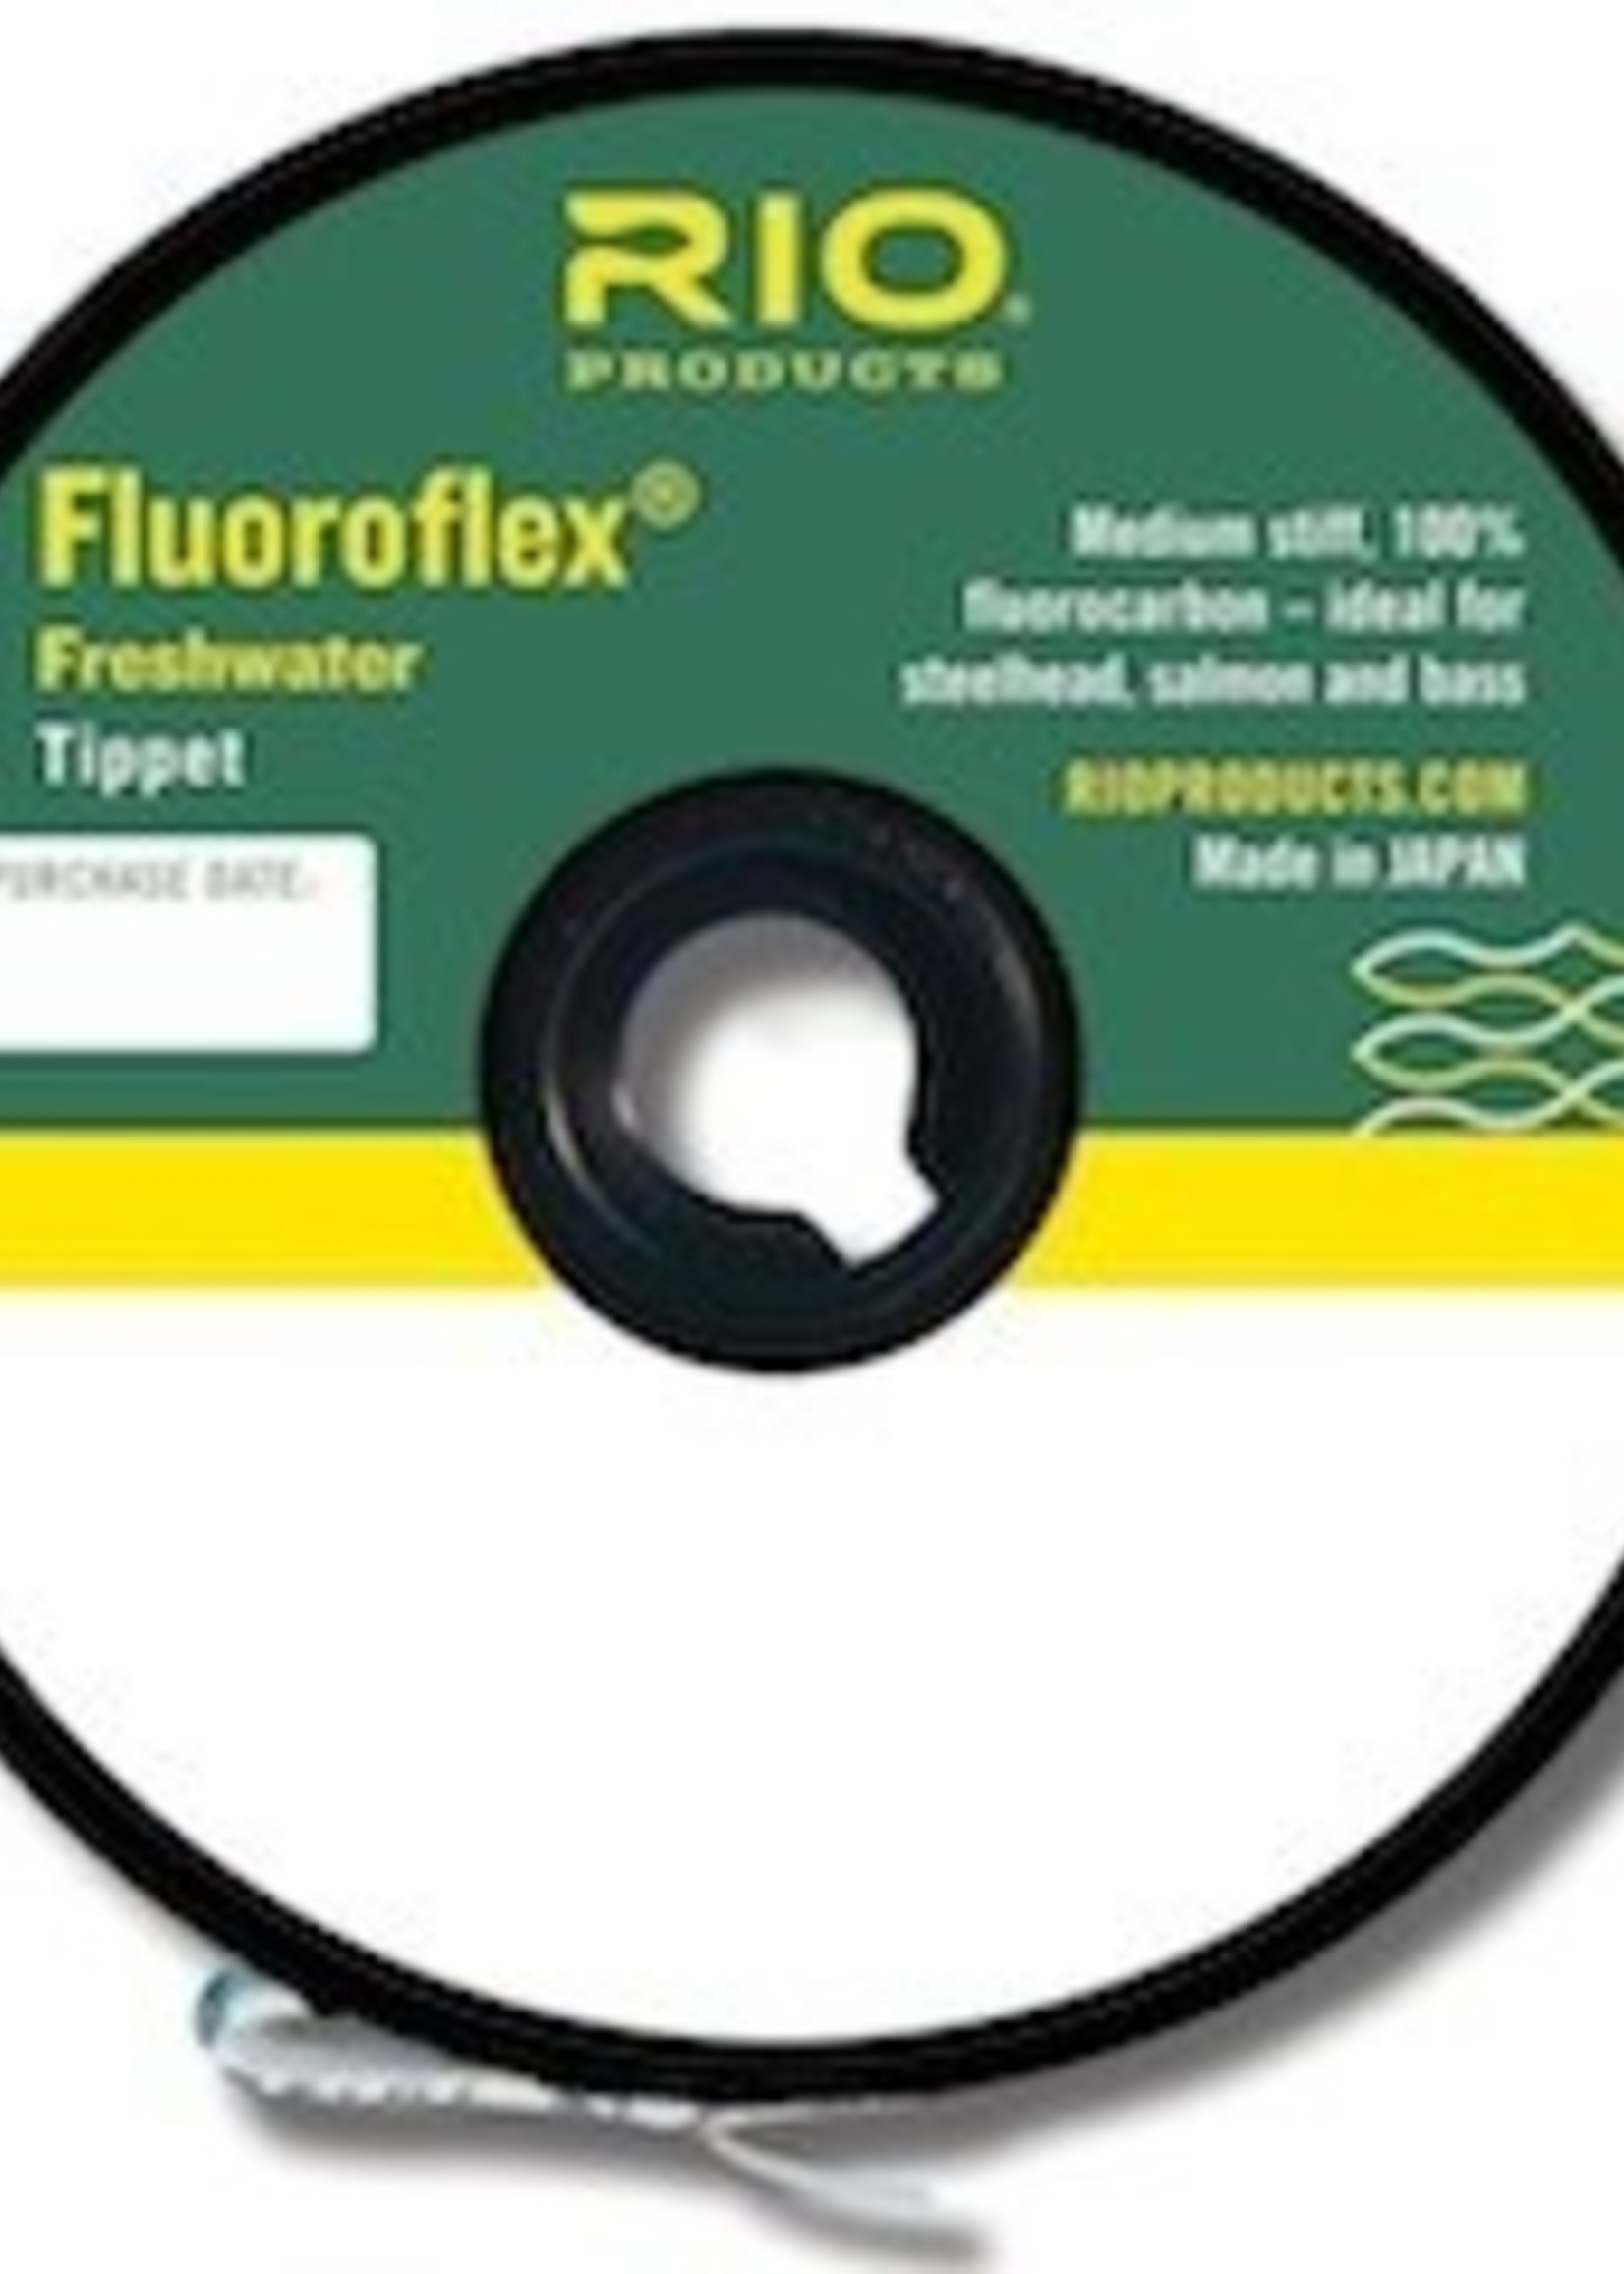 RIO Products Rio Fluoroflex Freshwater Tippet 5X